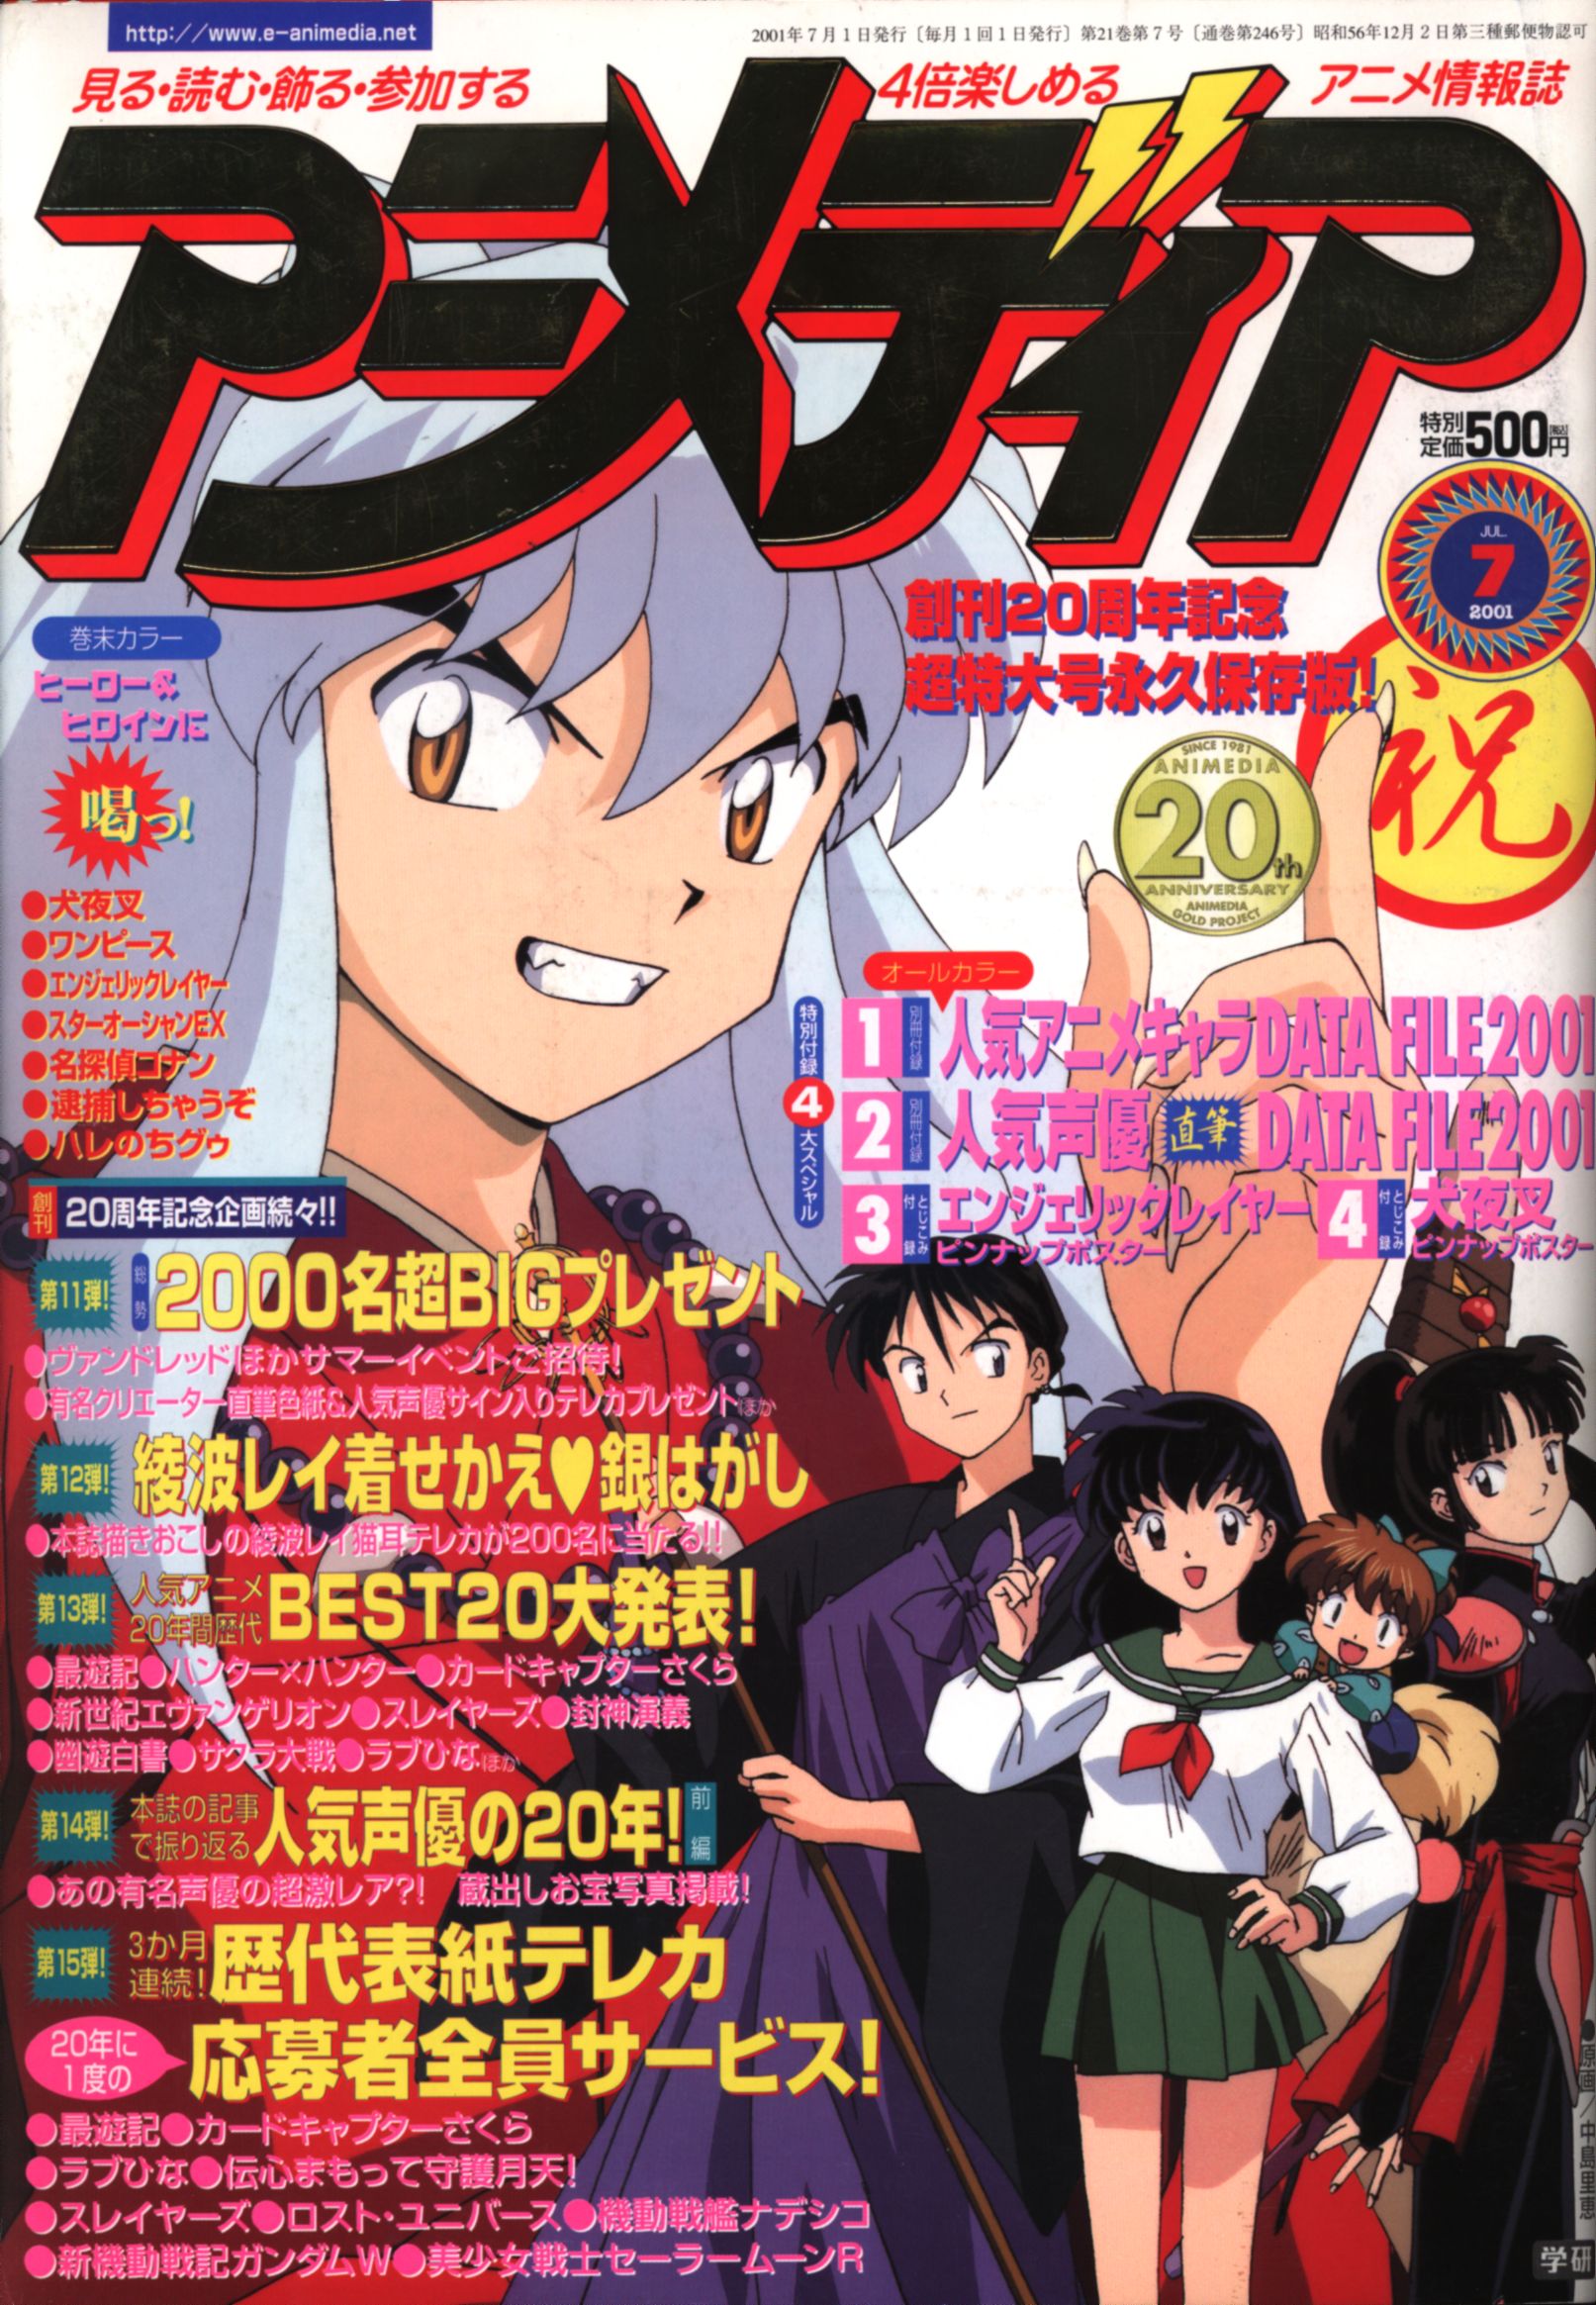 Gakushu Kenkyusha Gakken Anime Magazines From 01 Heisei 13 Appendix With Animedia 01 Heisei 13 July Edition 107 Mandarake Online Shop